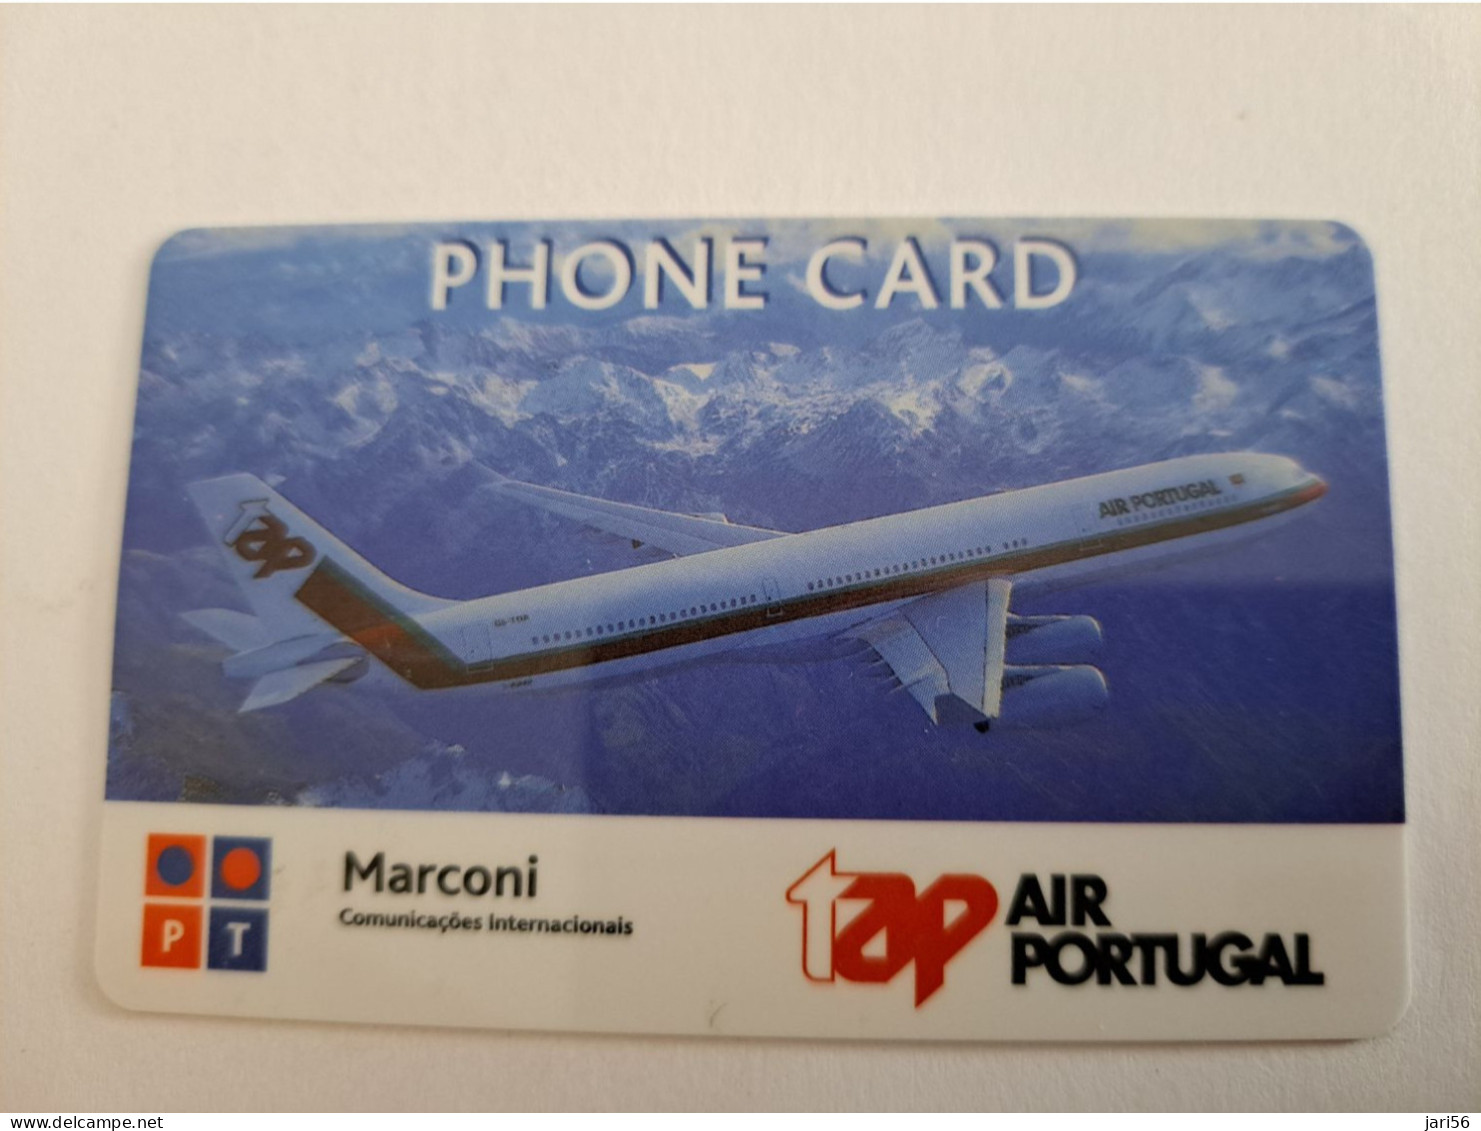 PORTUGAL / MARCONI/ AIR PORTUGAL/ AIRPLANE /PHONE CARD  Nice  Fine Used    Prepaid   **15464** - Portugal